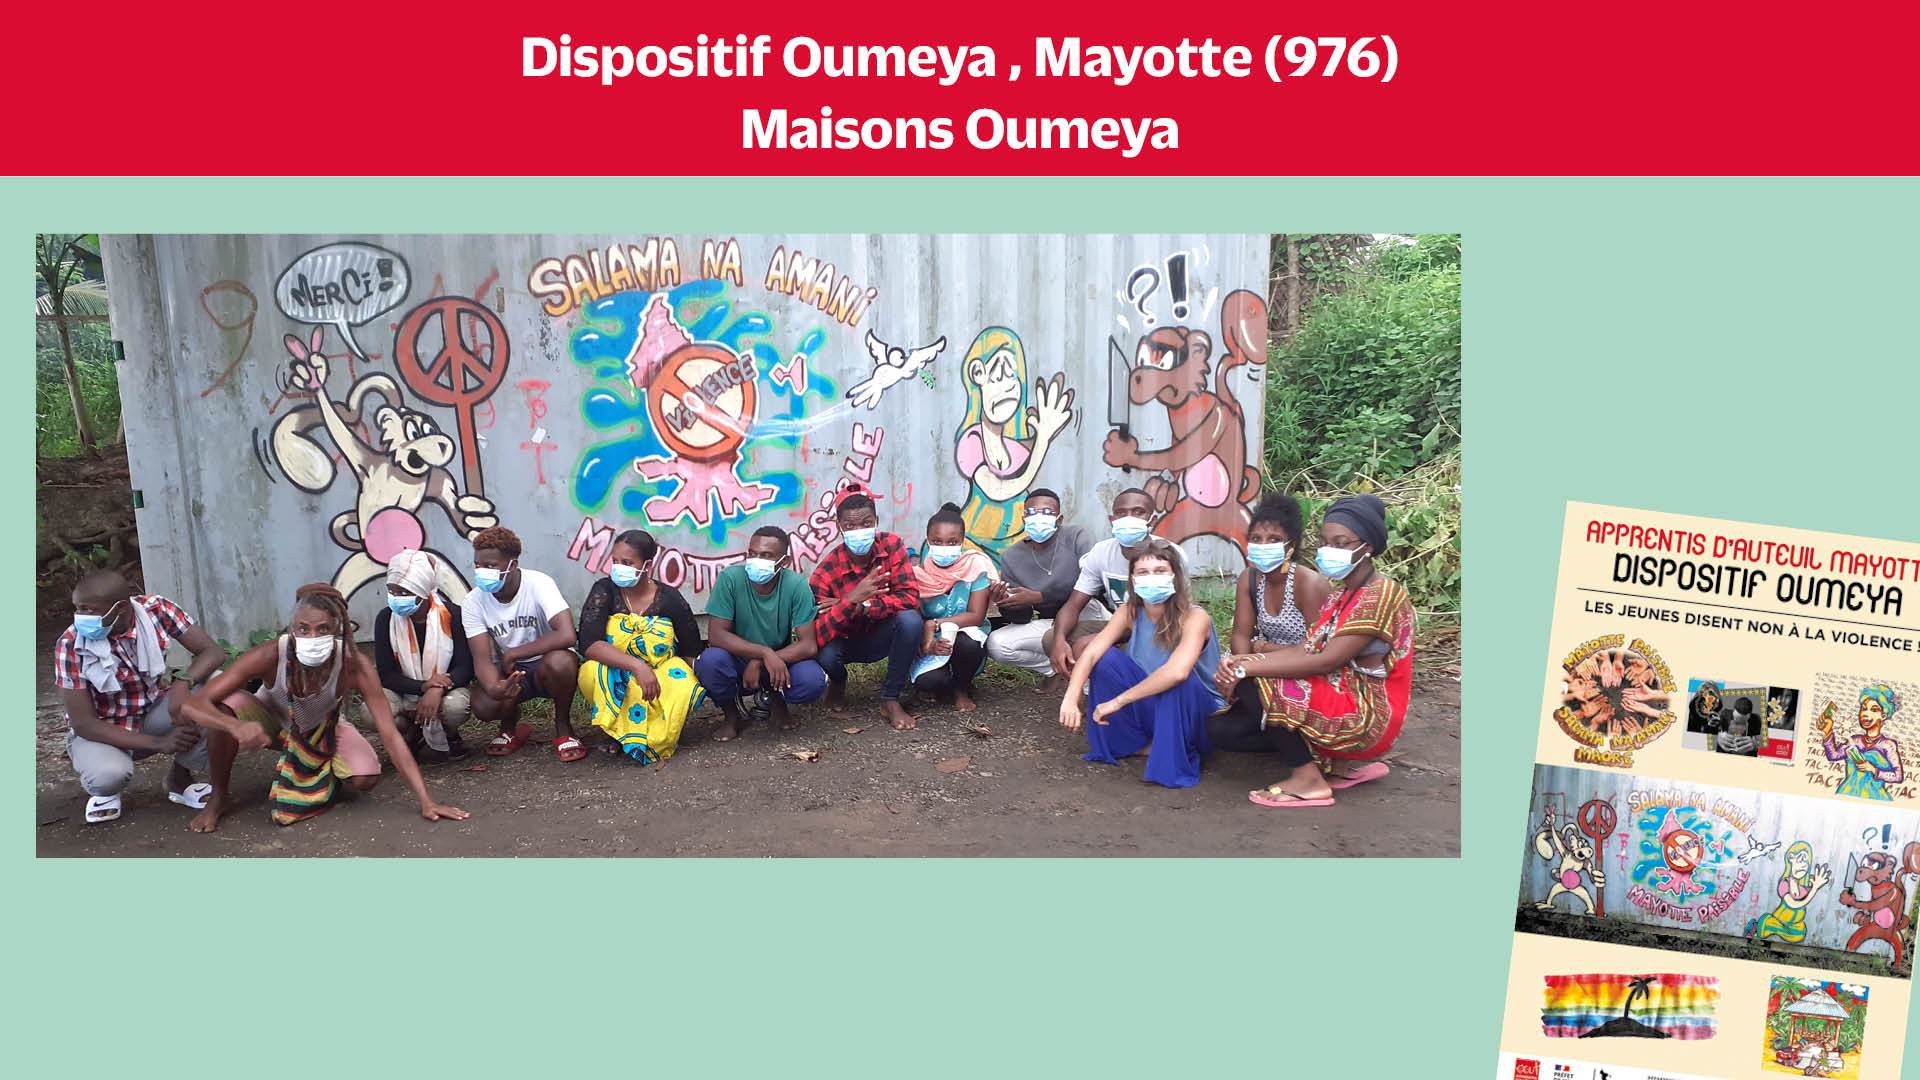 15. Oumeya Mayotte